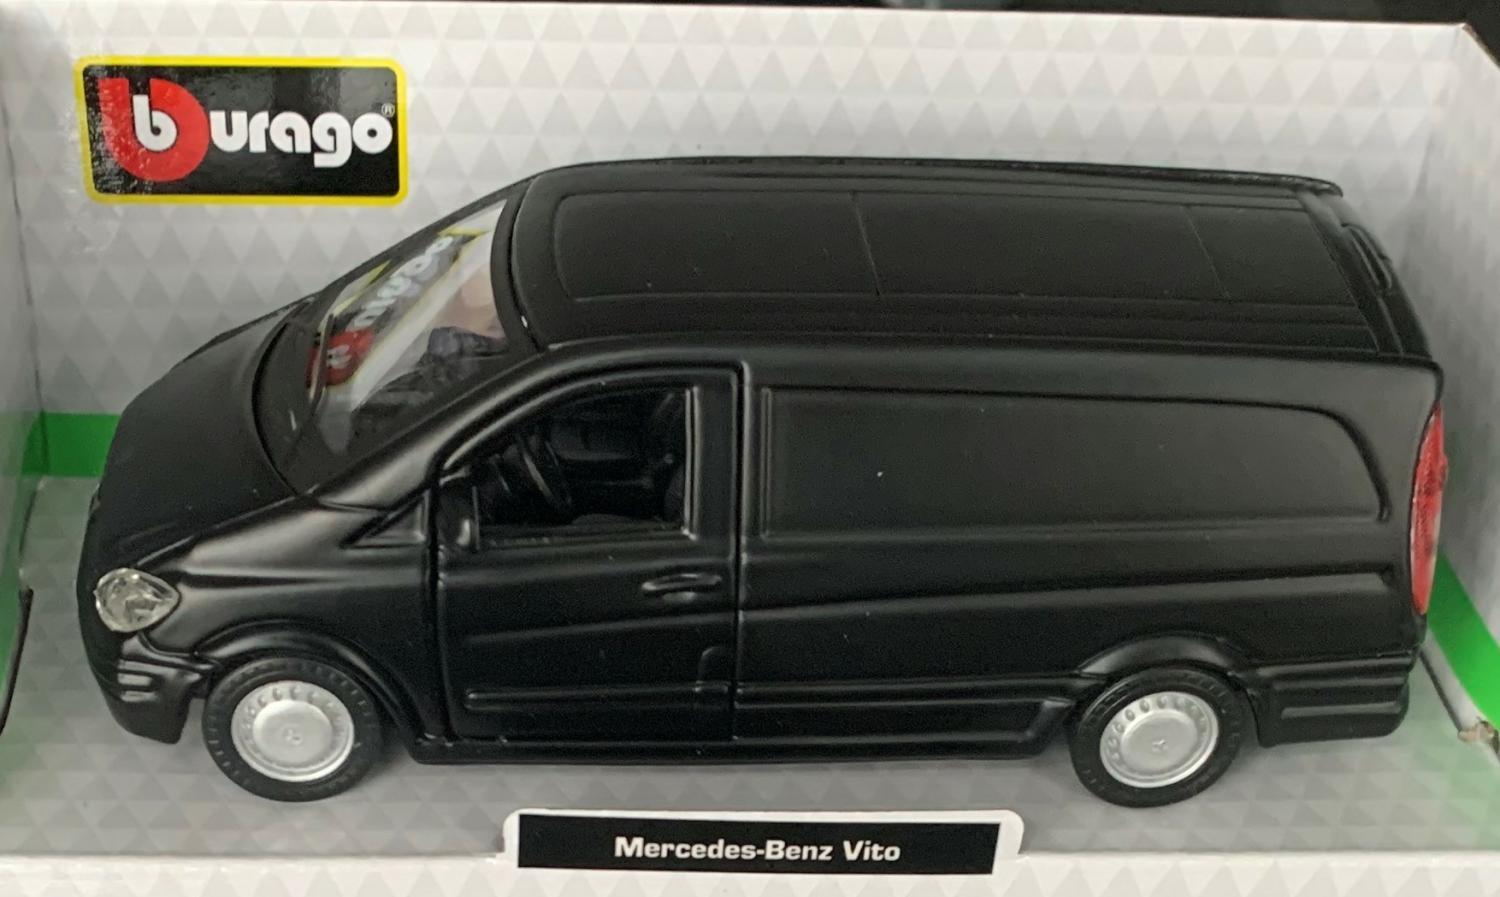 Mercedes Benz Vito in matt black 1:32 scale model from Bburago